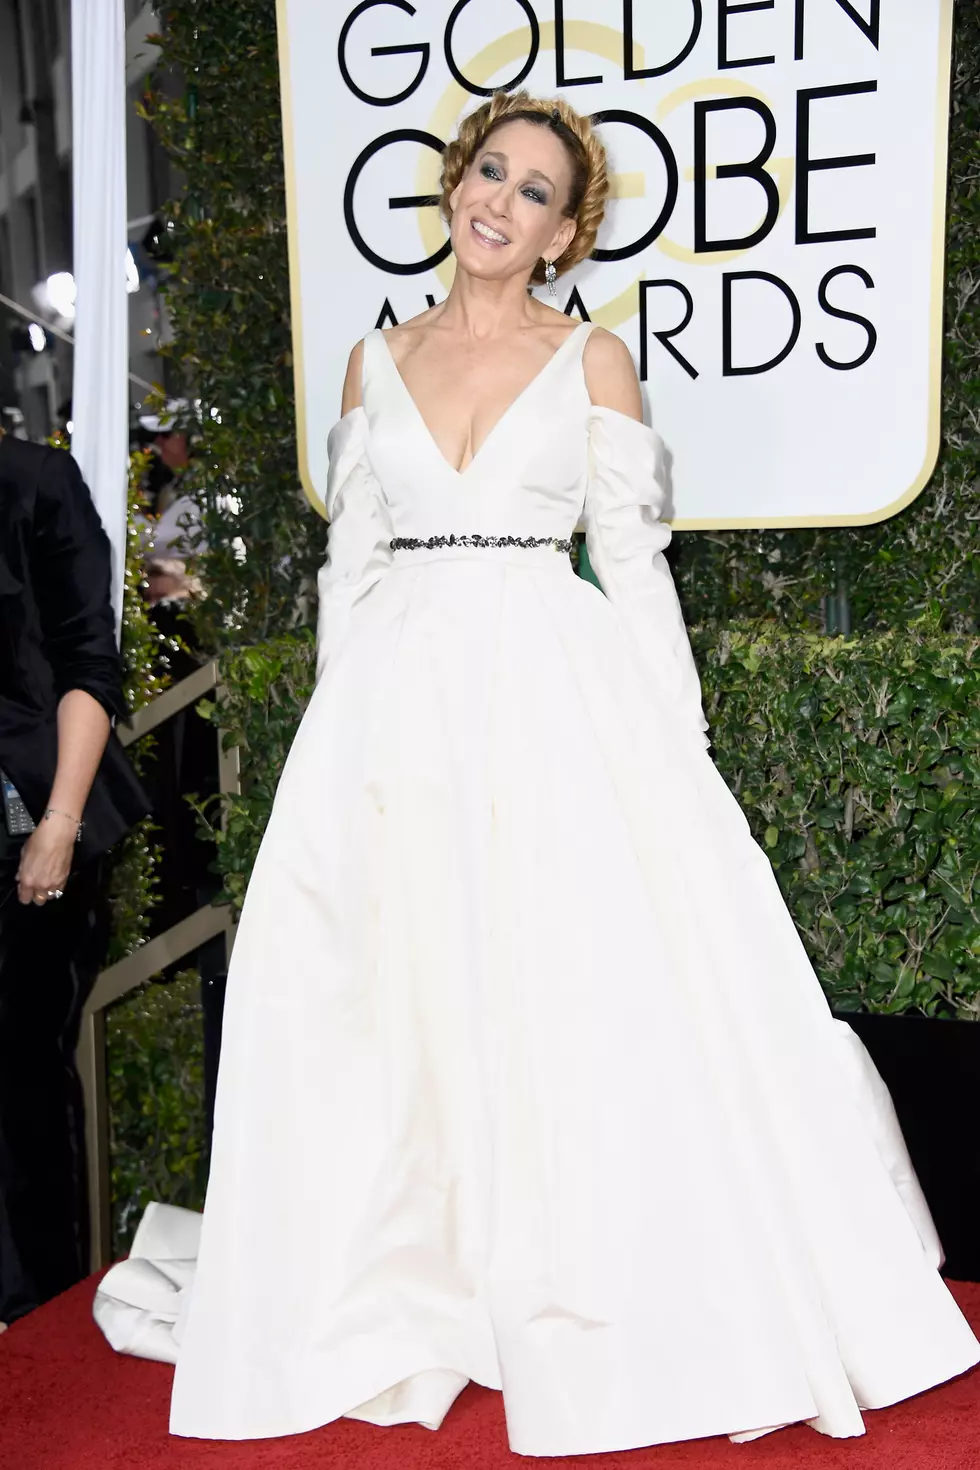 Sarah Jessica Parker at the 2017 Golden Globes